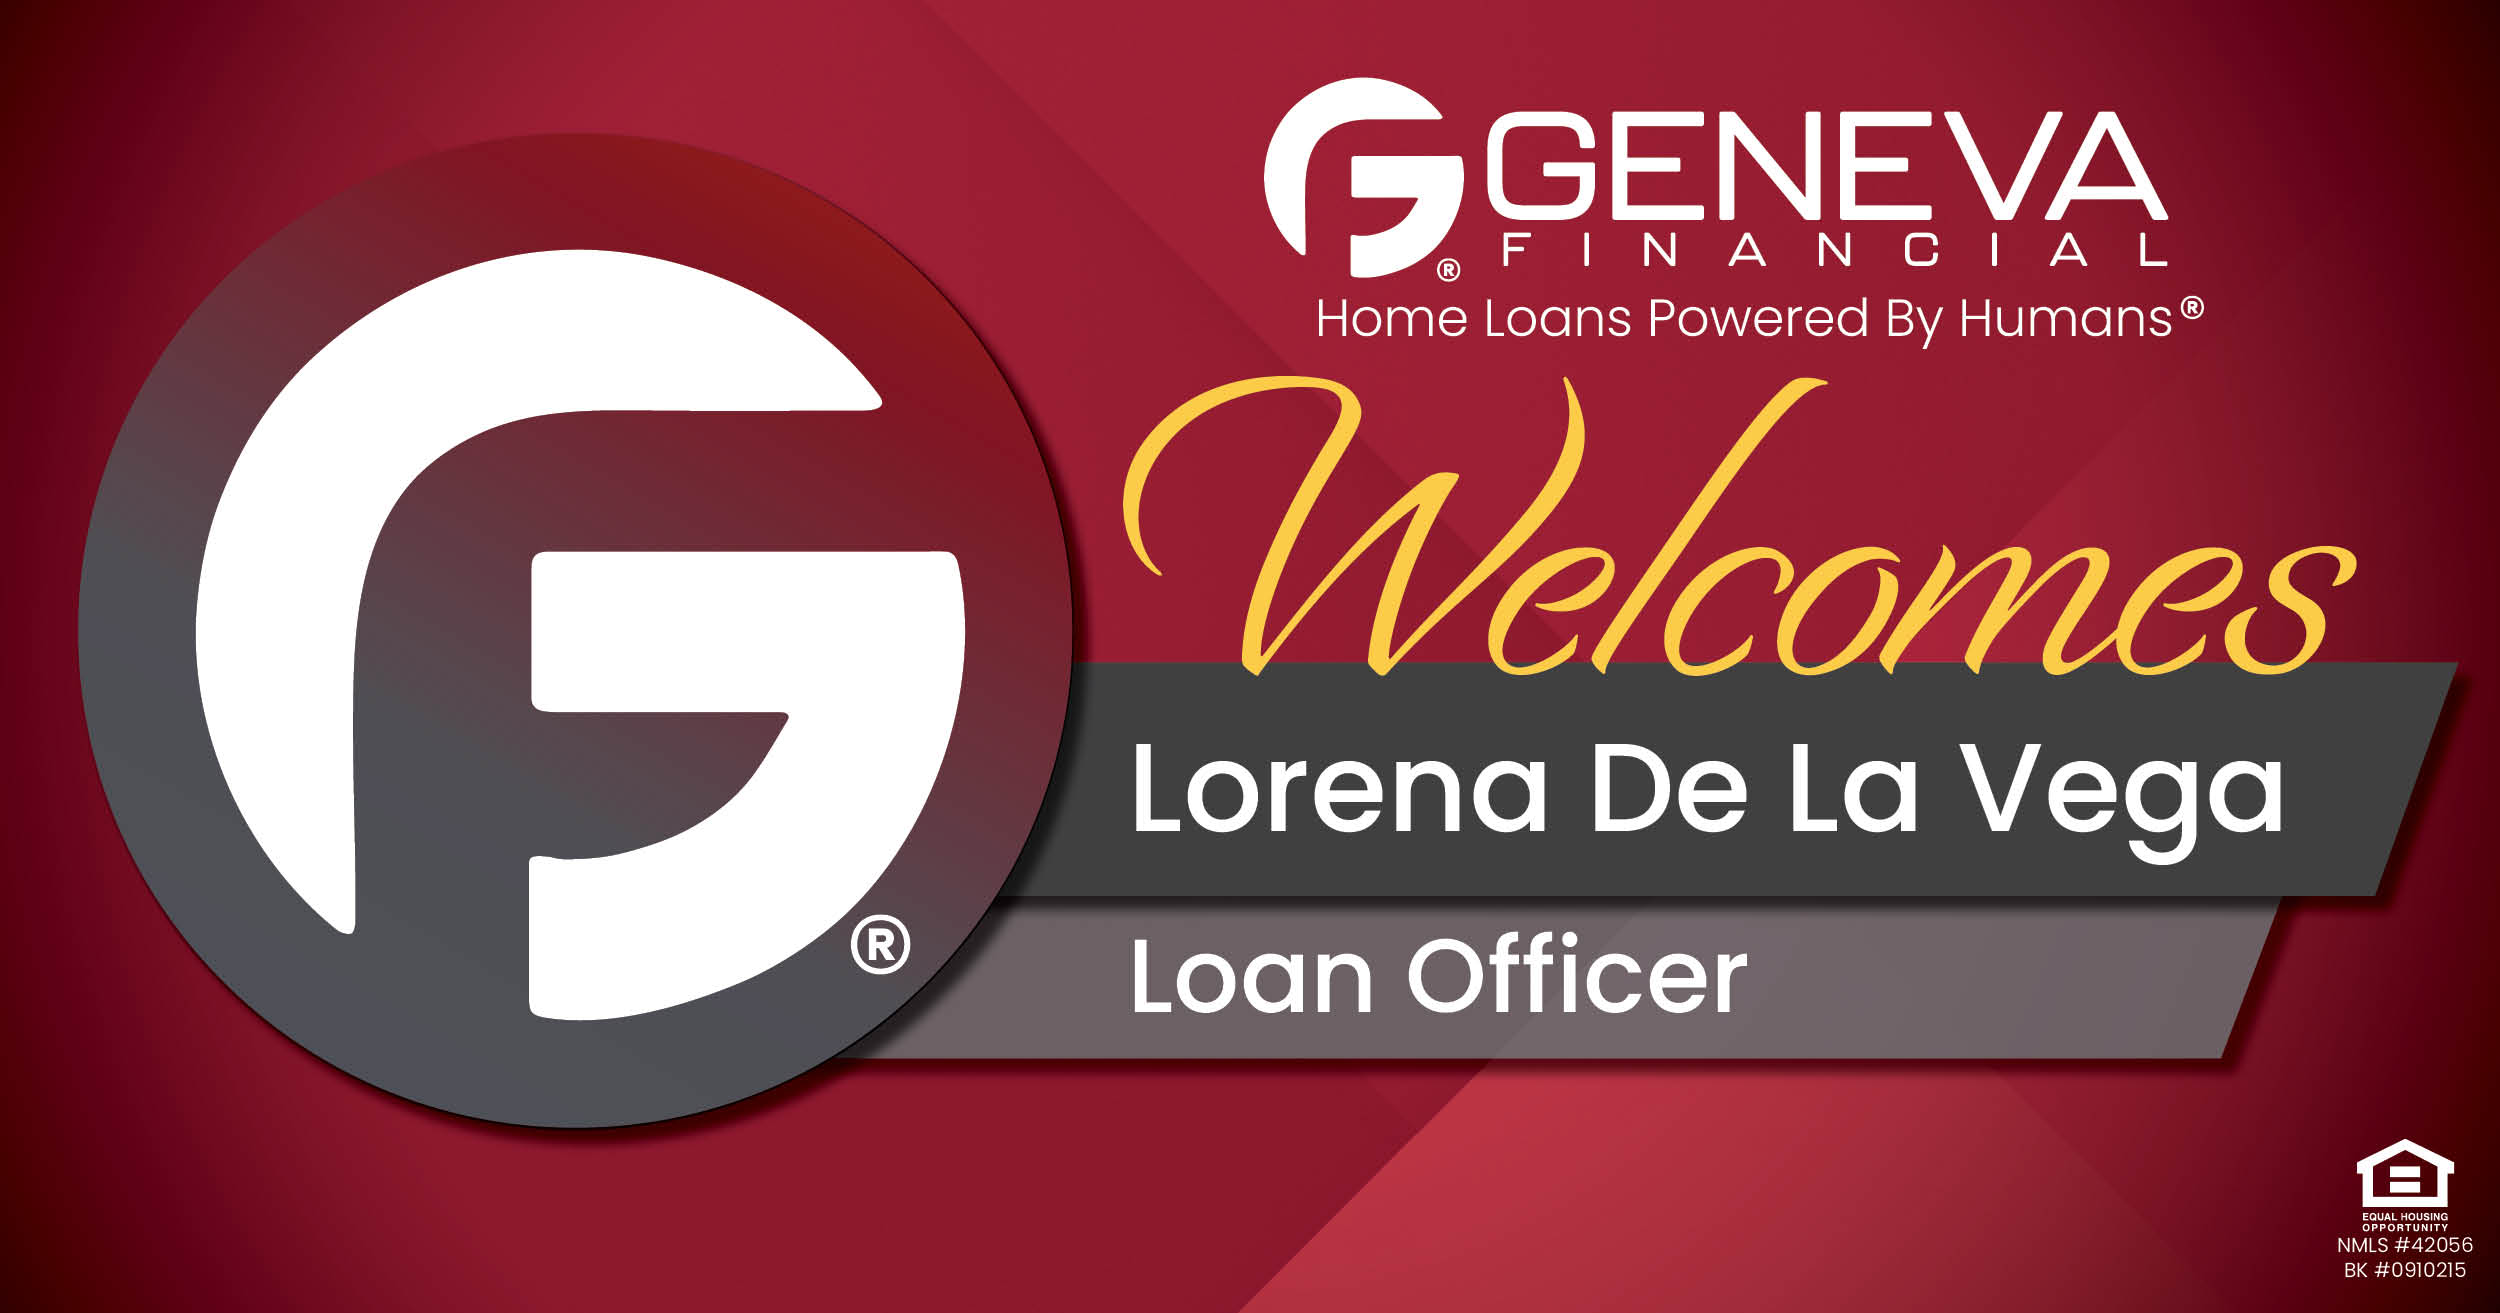 Geneva Financial Welcomes New Loan Officer Lorena De La Vega to Miami, FL – Home Loans Powered by Humans®.